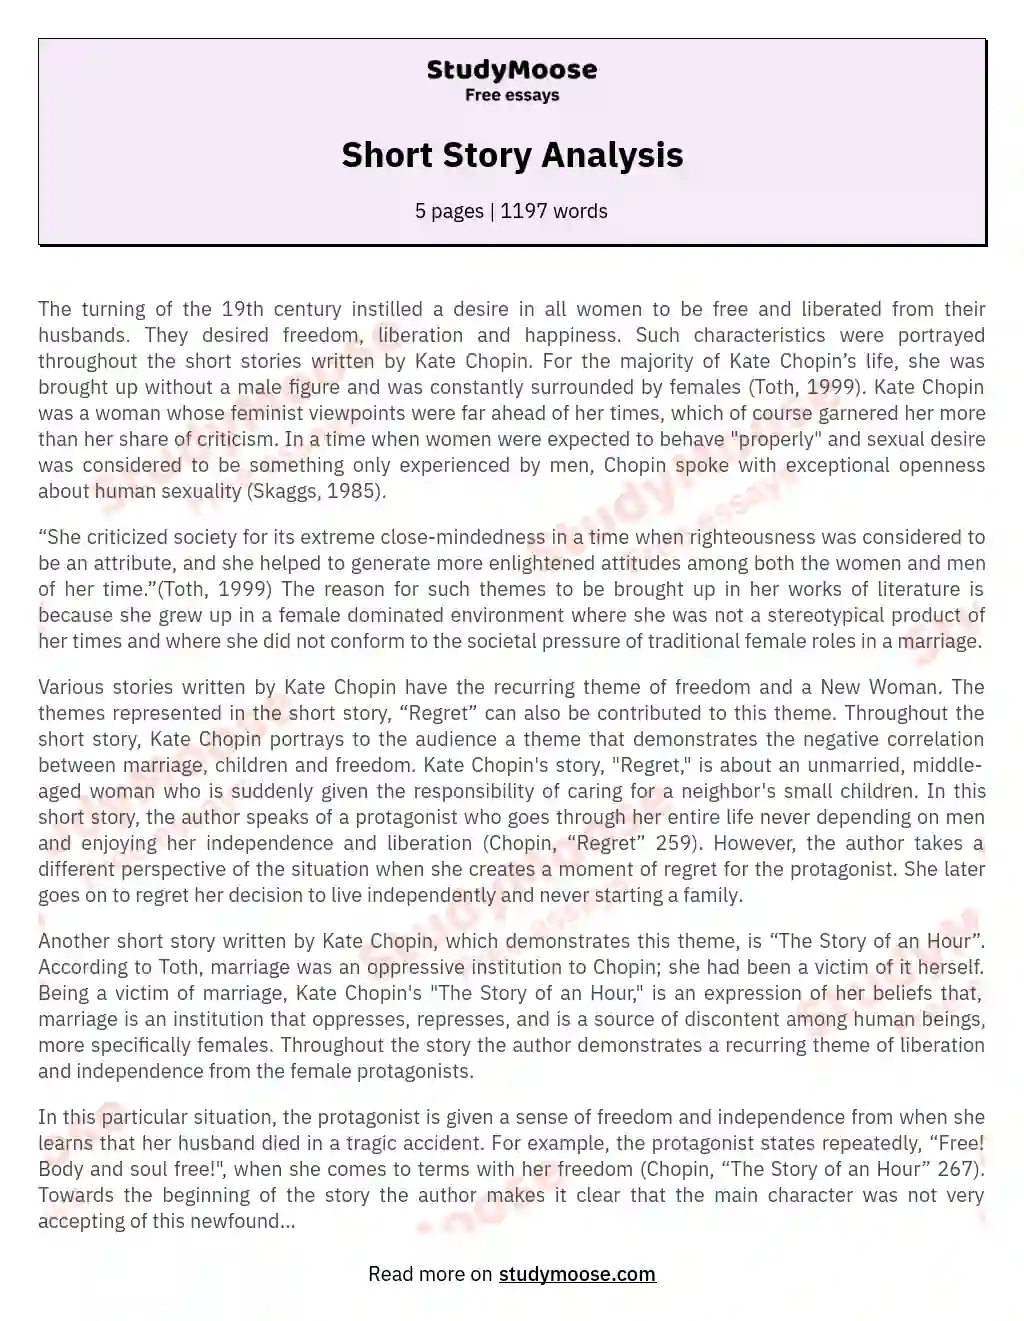 Short Story Analysis essay